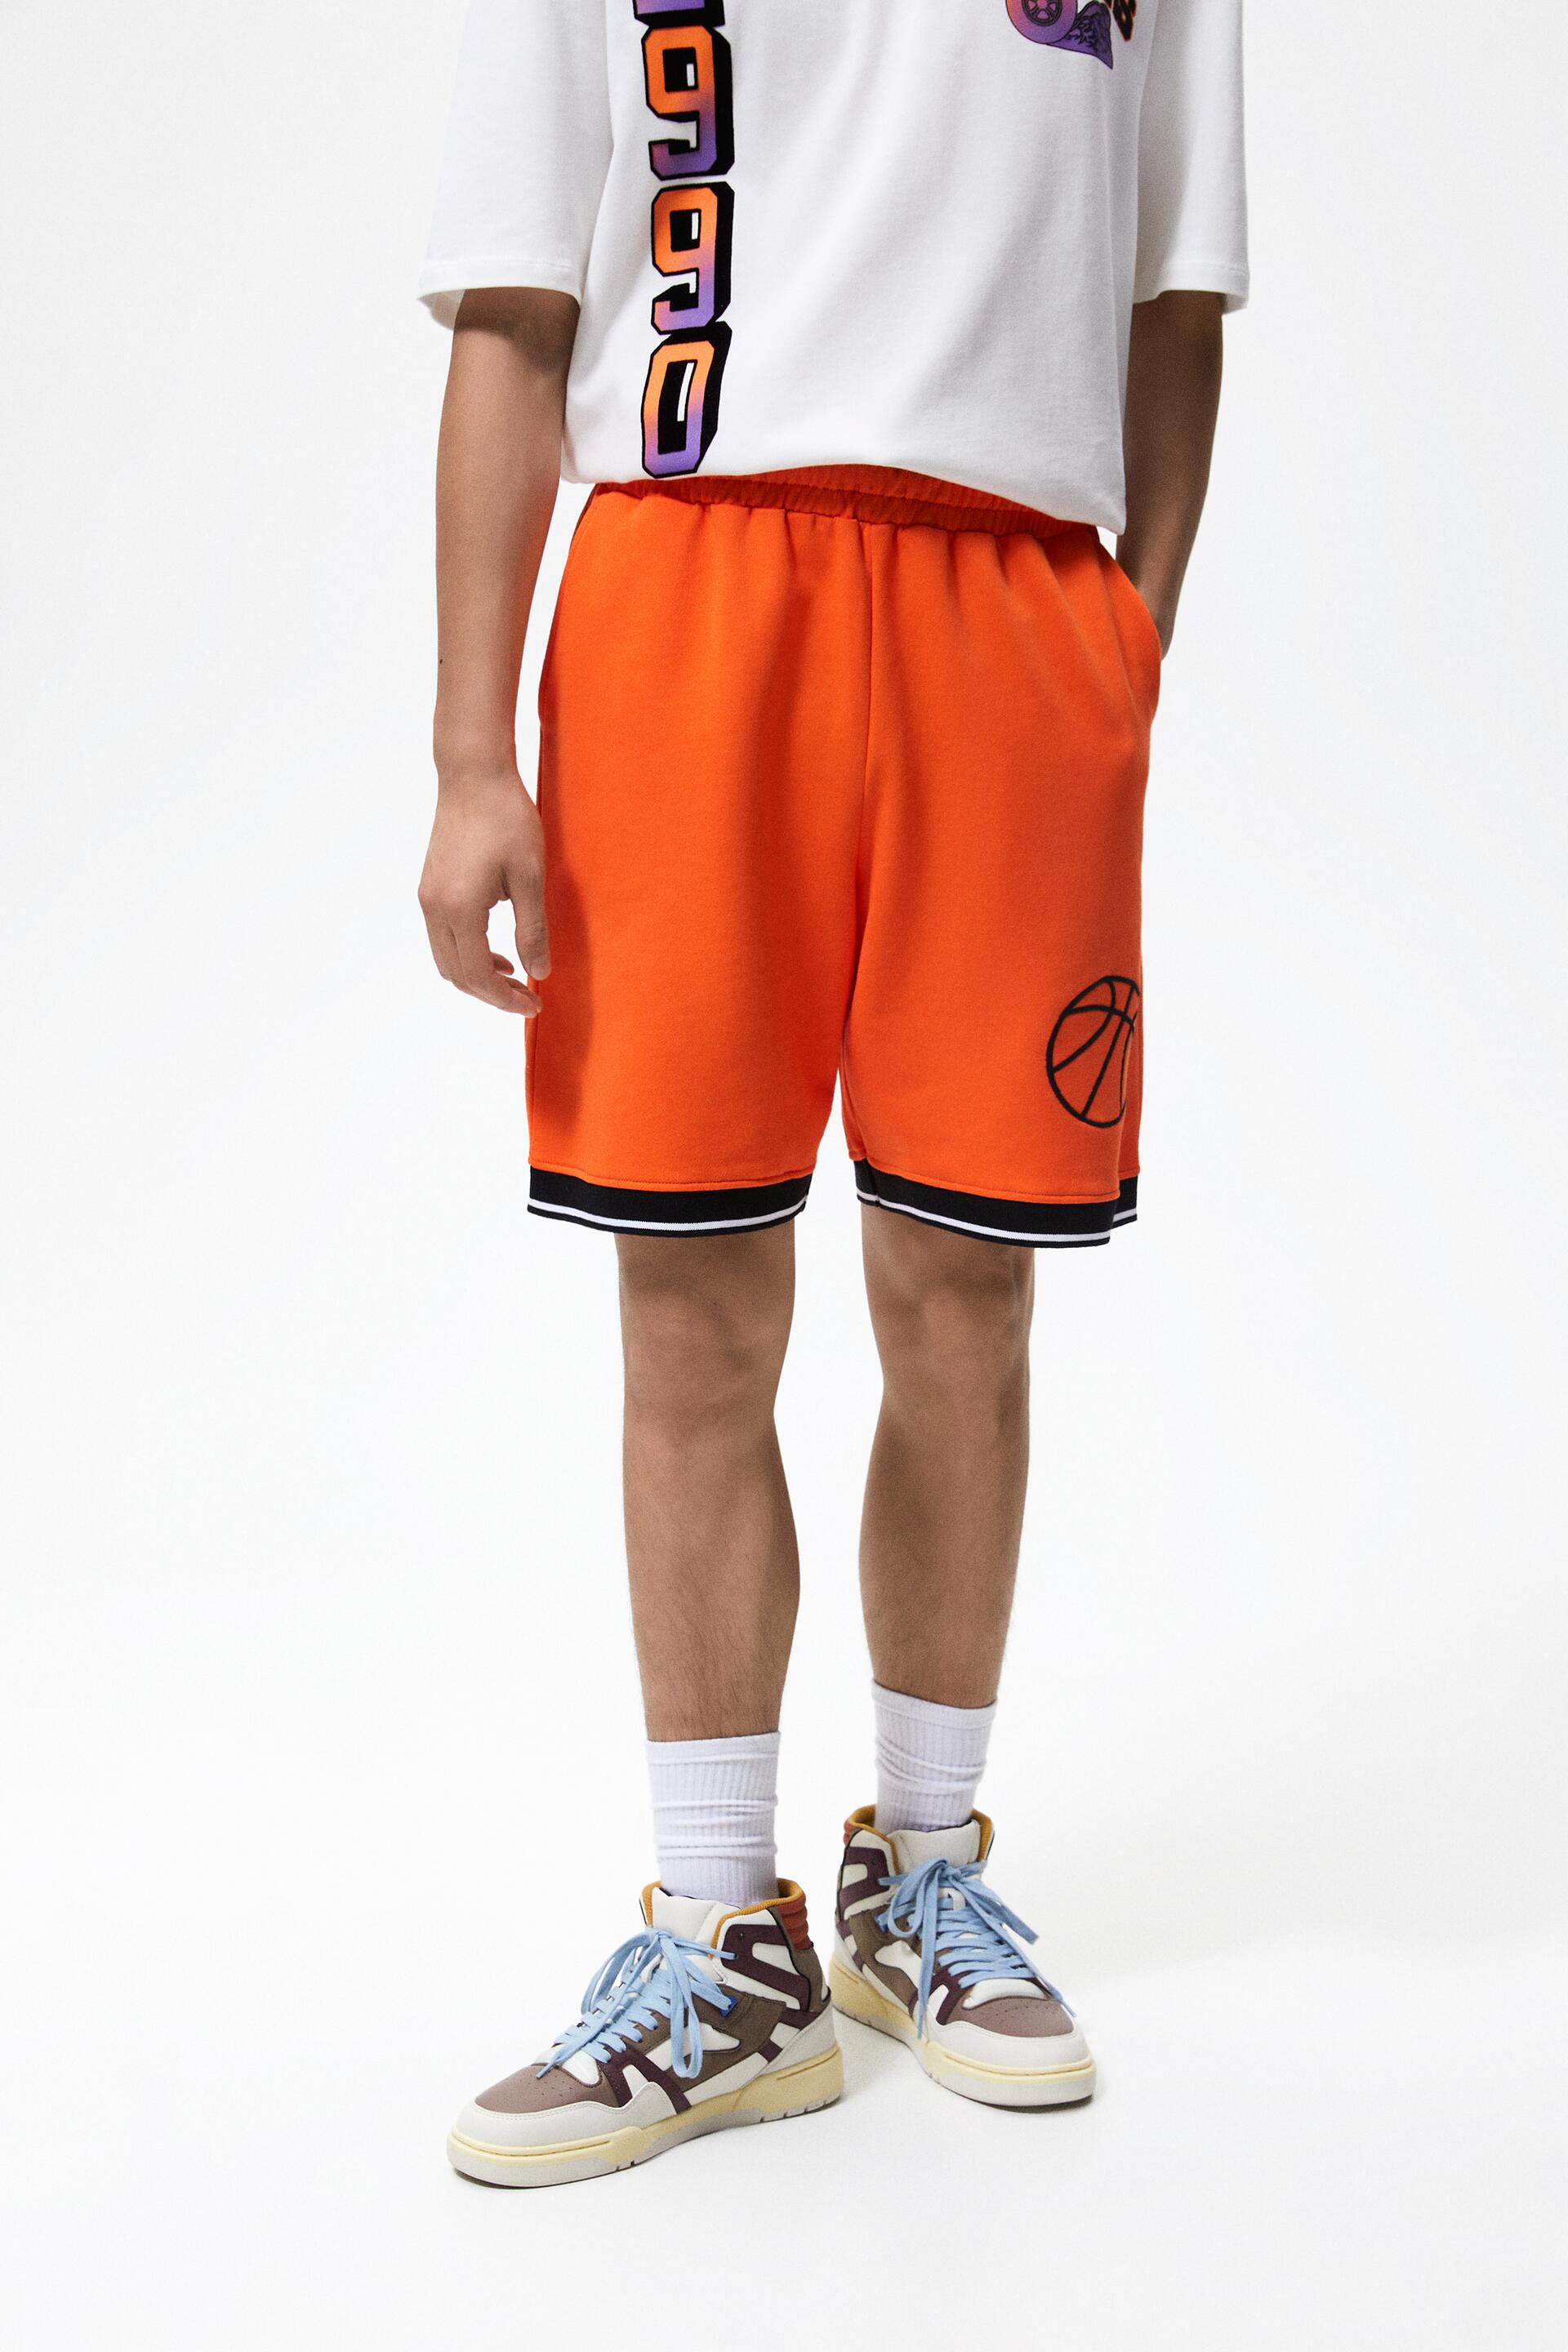 Zara Basketball Embroidered Shorts - Big Apple Buddy